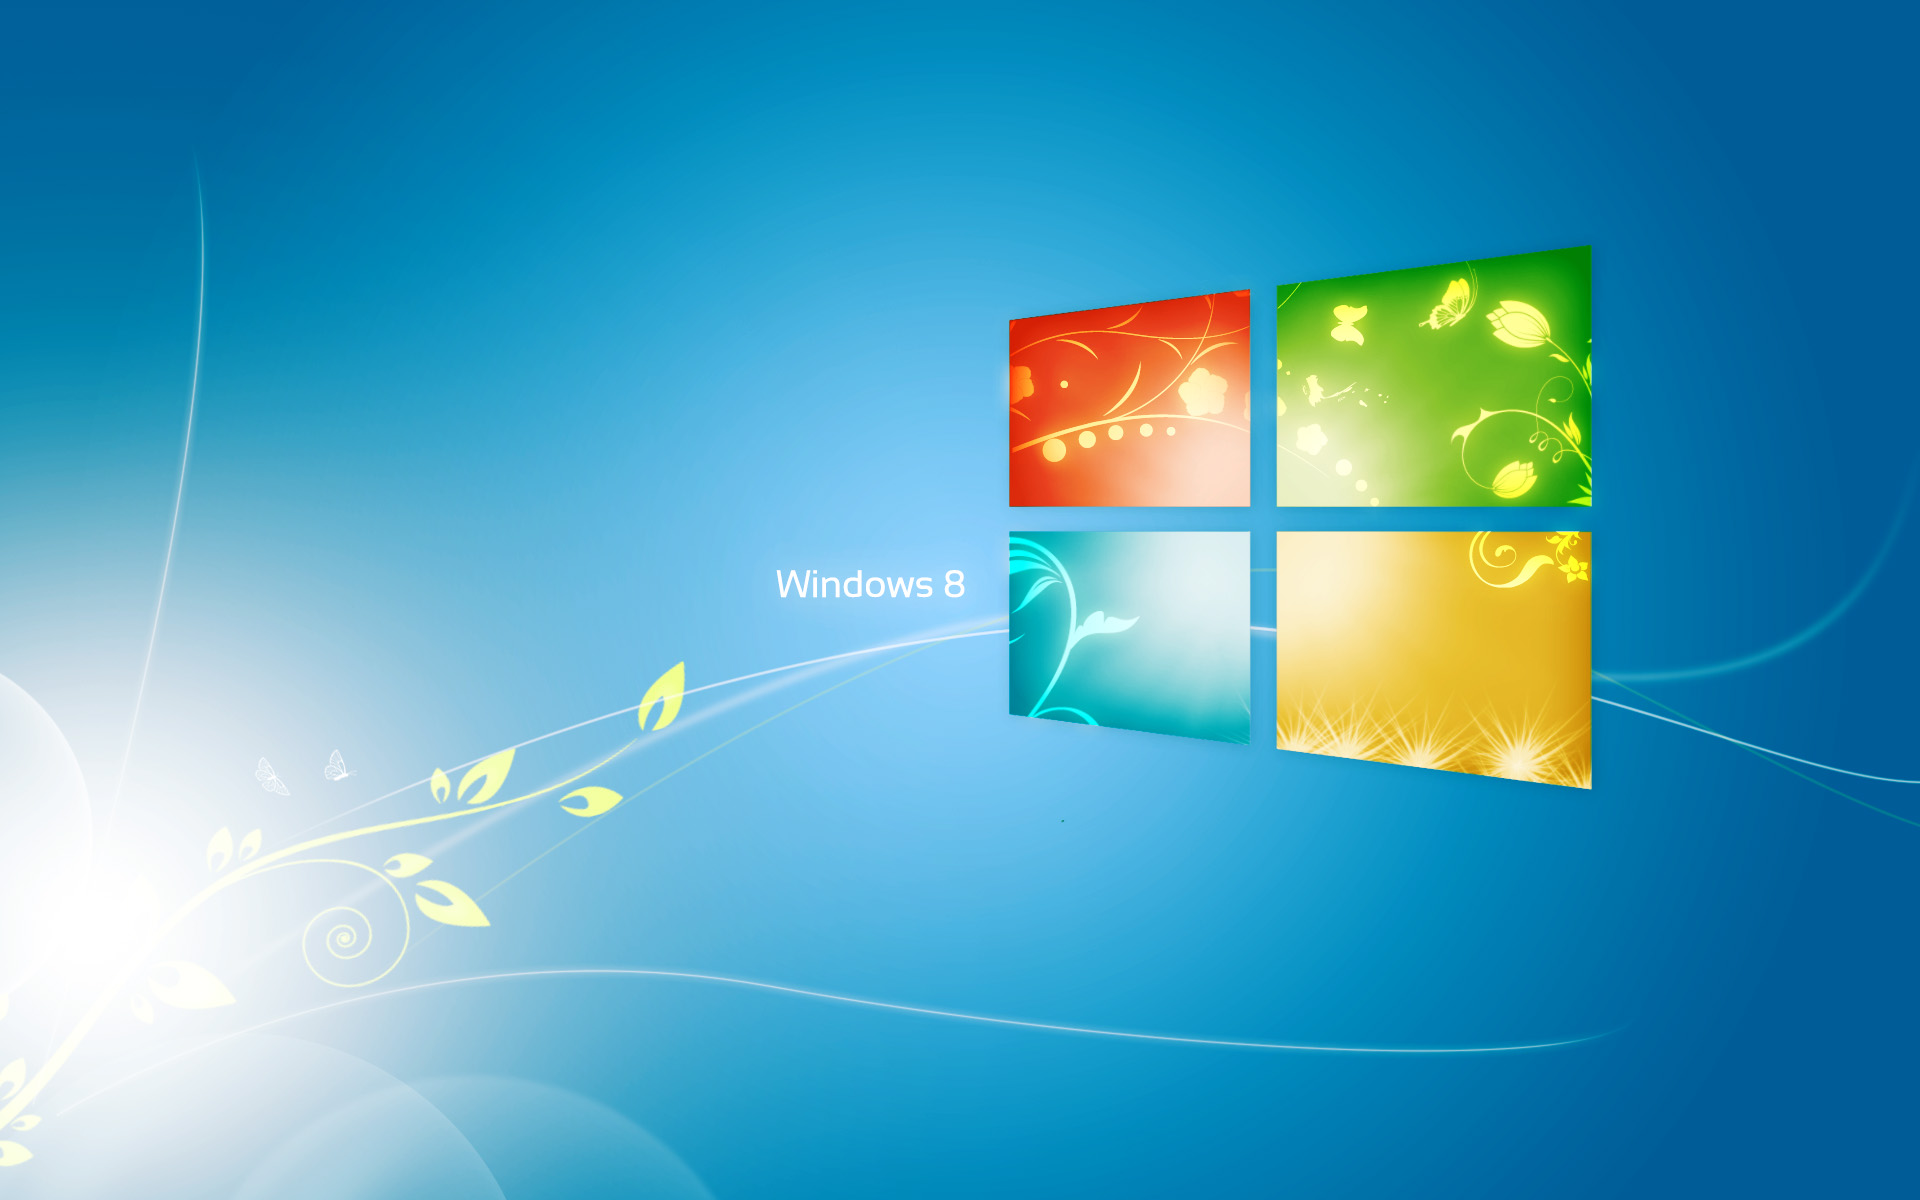 windows 8.1 wallpaper hd,operating system,graphic design,sky,technology,screenshot